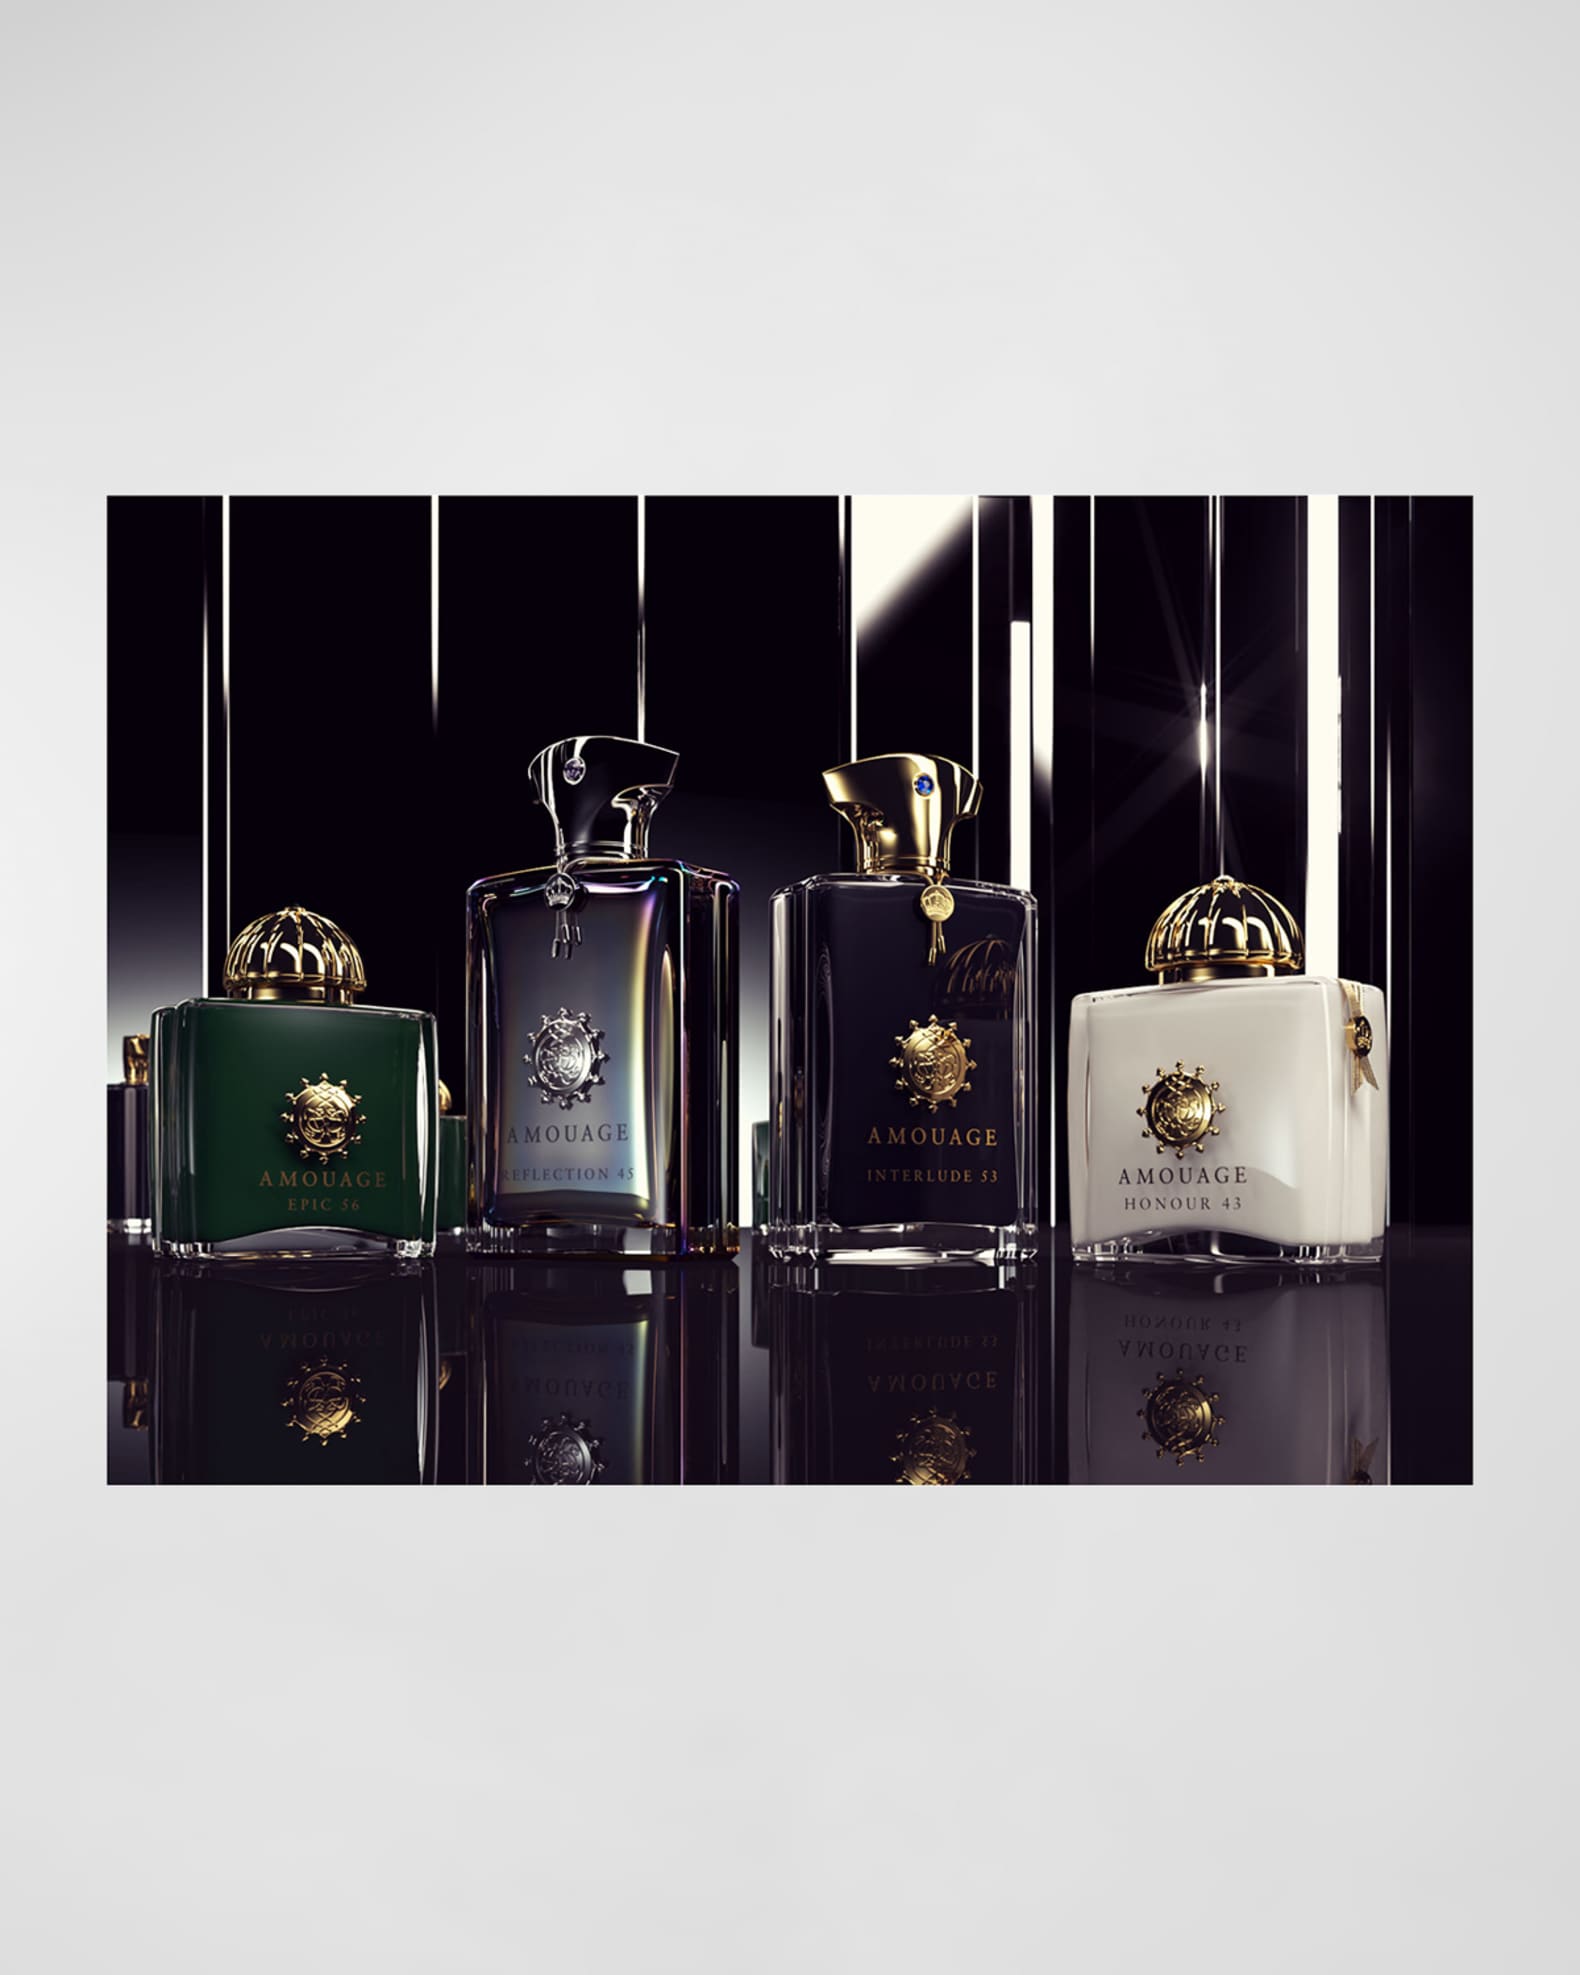 Amouage 3.4 oz. Interlude 53 Eau de Parfum | Neiman Marcus